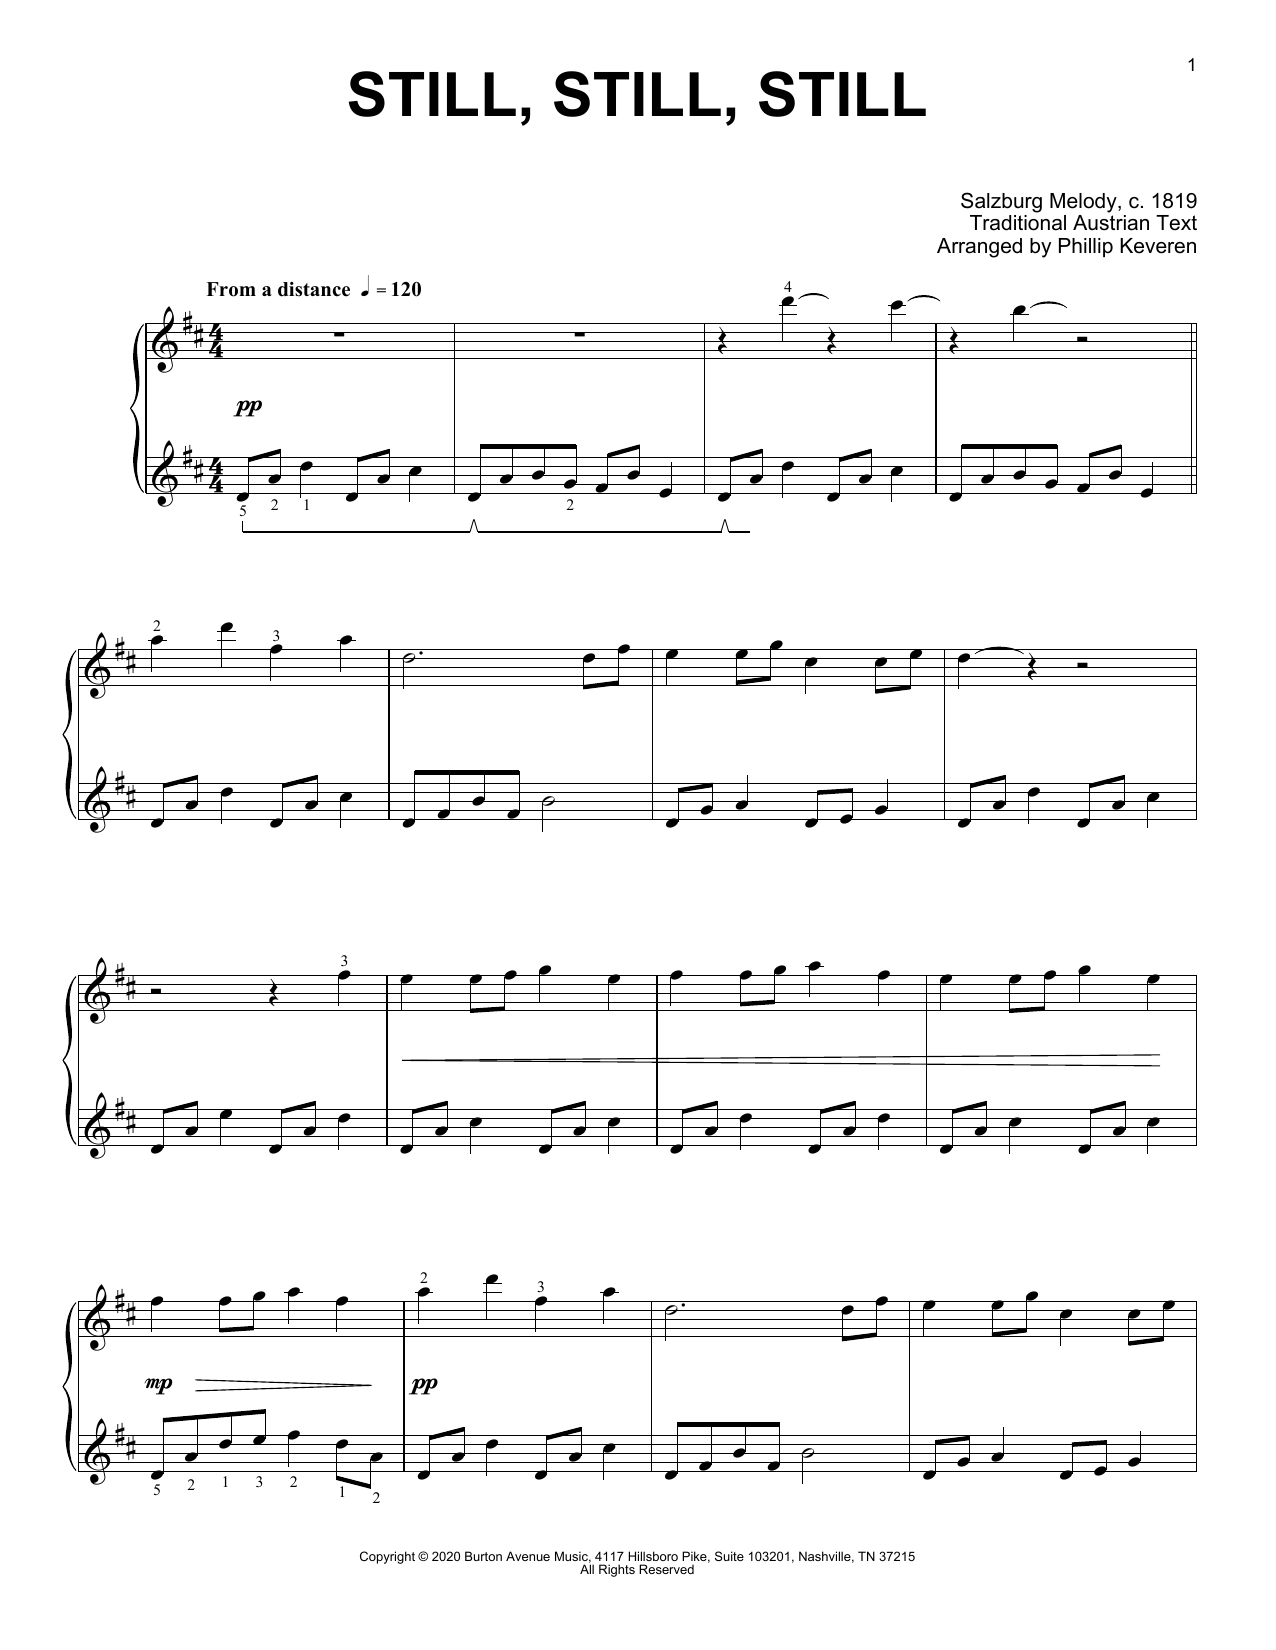 Traditional Carol Still, Still, Still (arr. Phillip Keveren) Sheet Music Notes & Chords for Piano Solo - Download or Print PDF